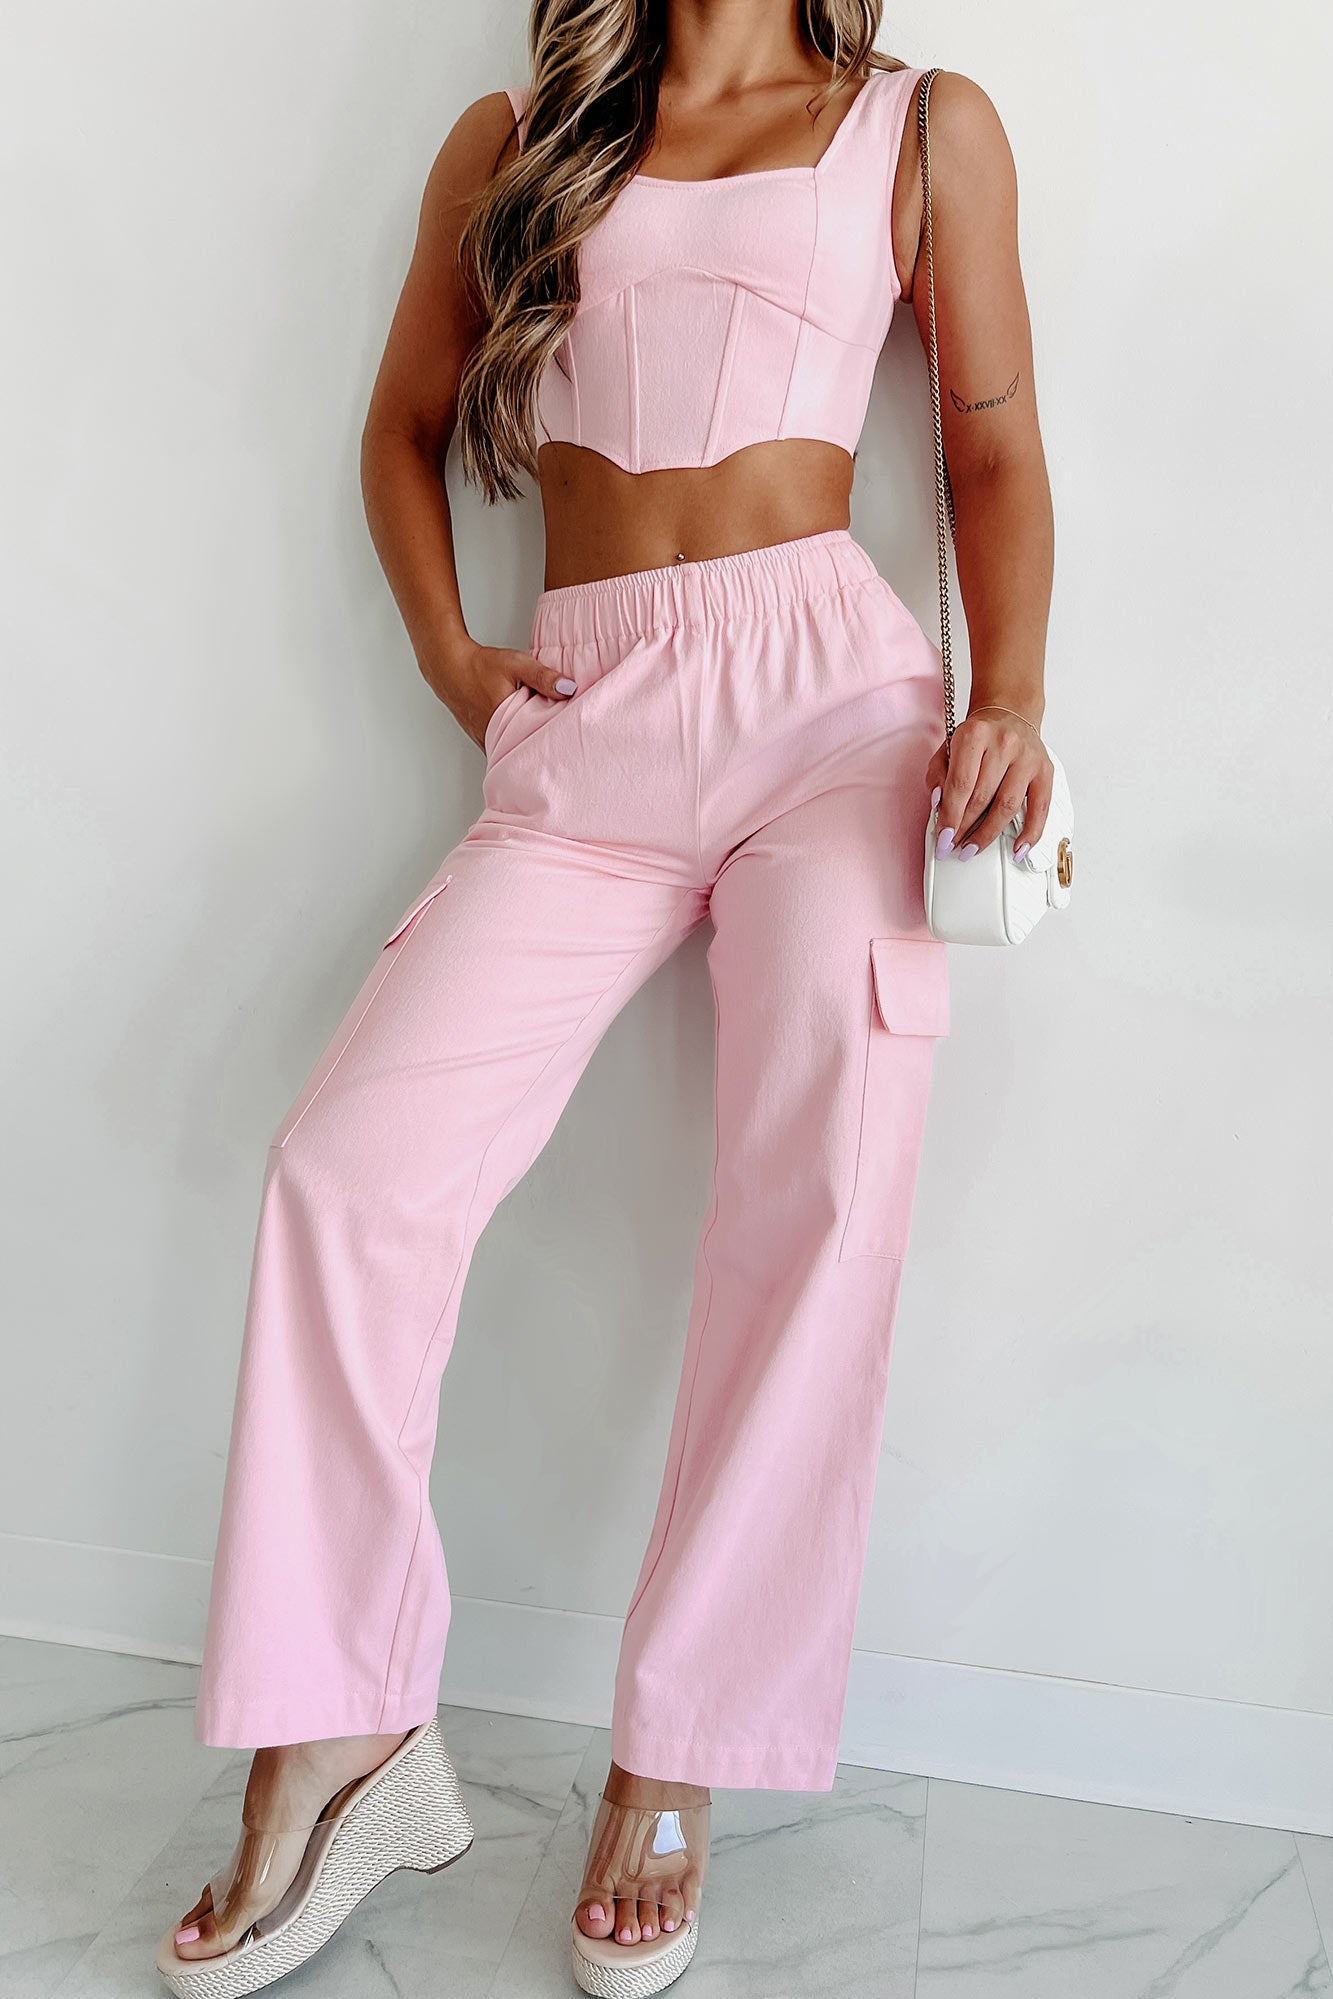 Hooked On The Look Corset Top & Cargo Pants Set (Pink) - NanaMacs